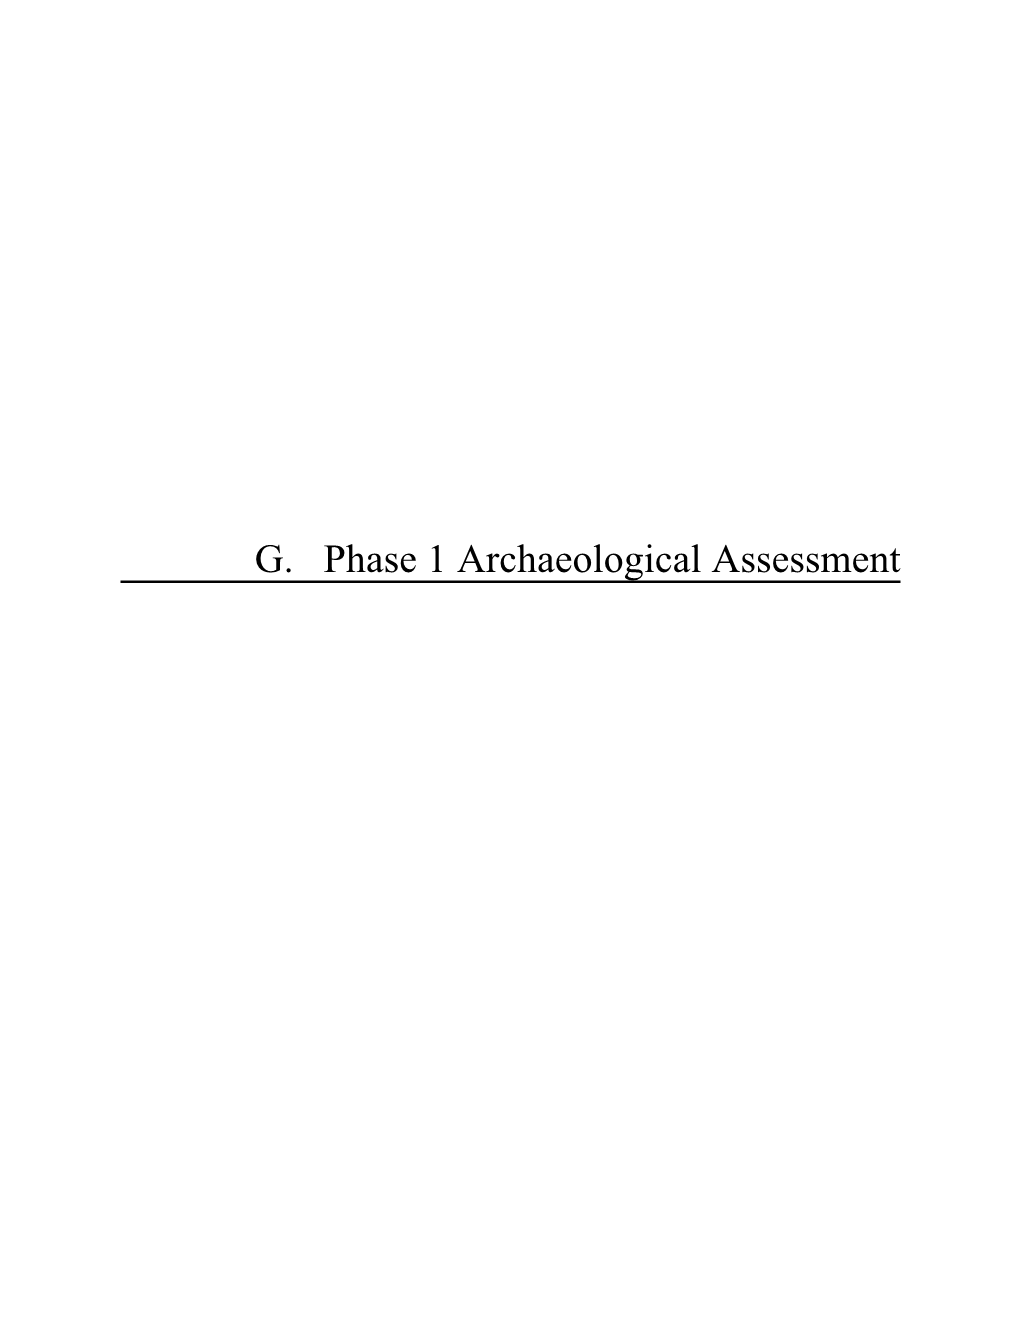 Appendix G Phase 1 Archaeological Assessment